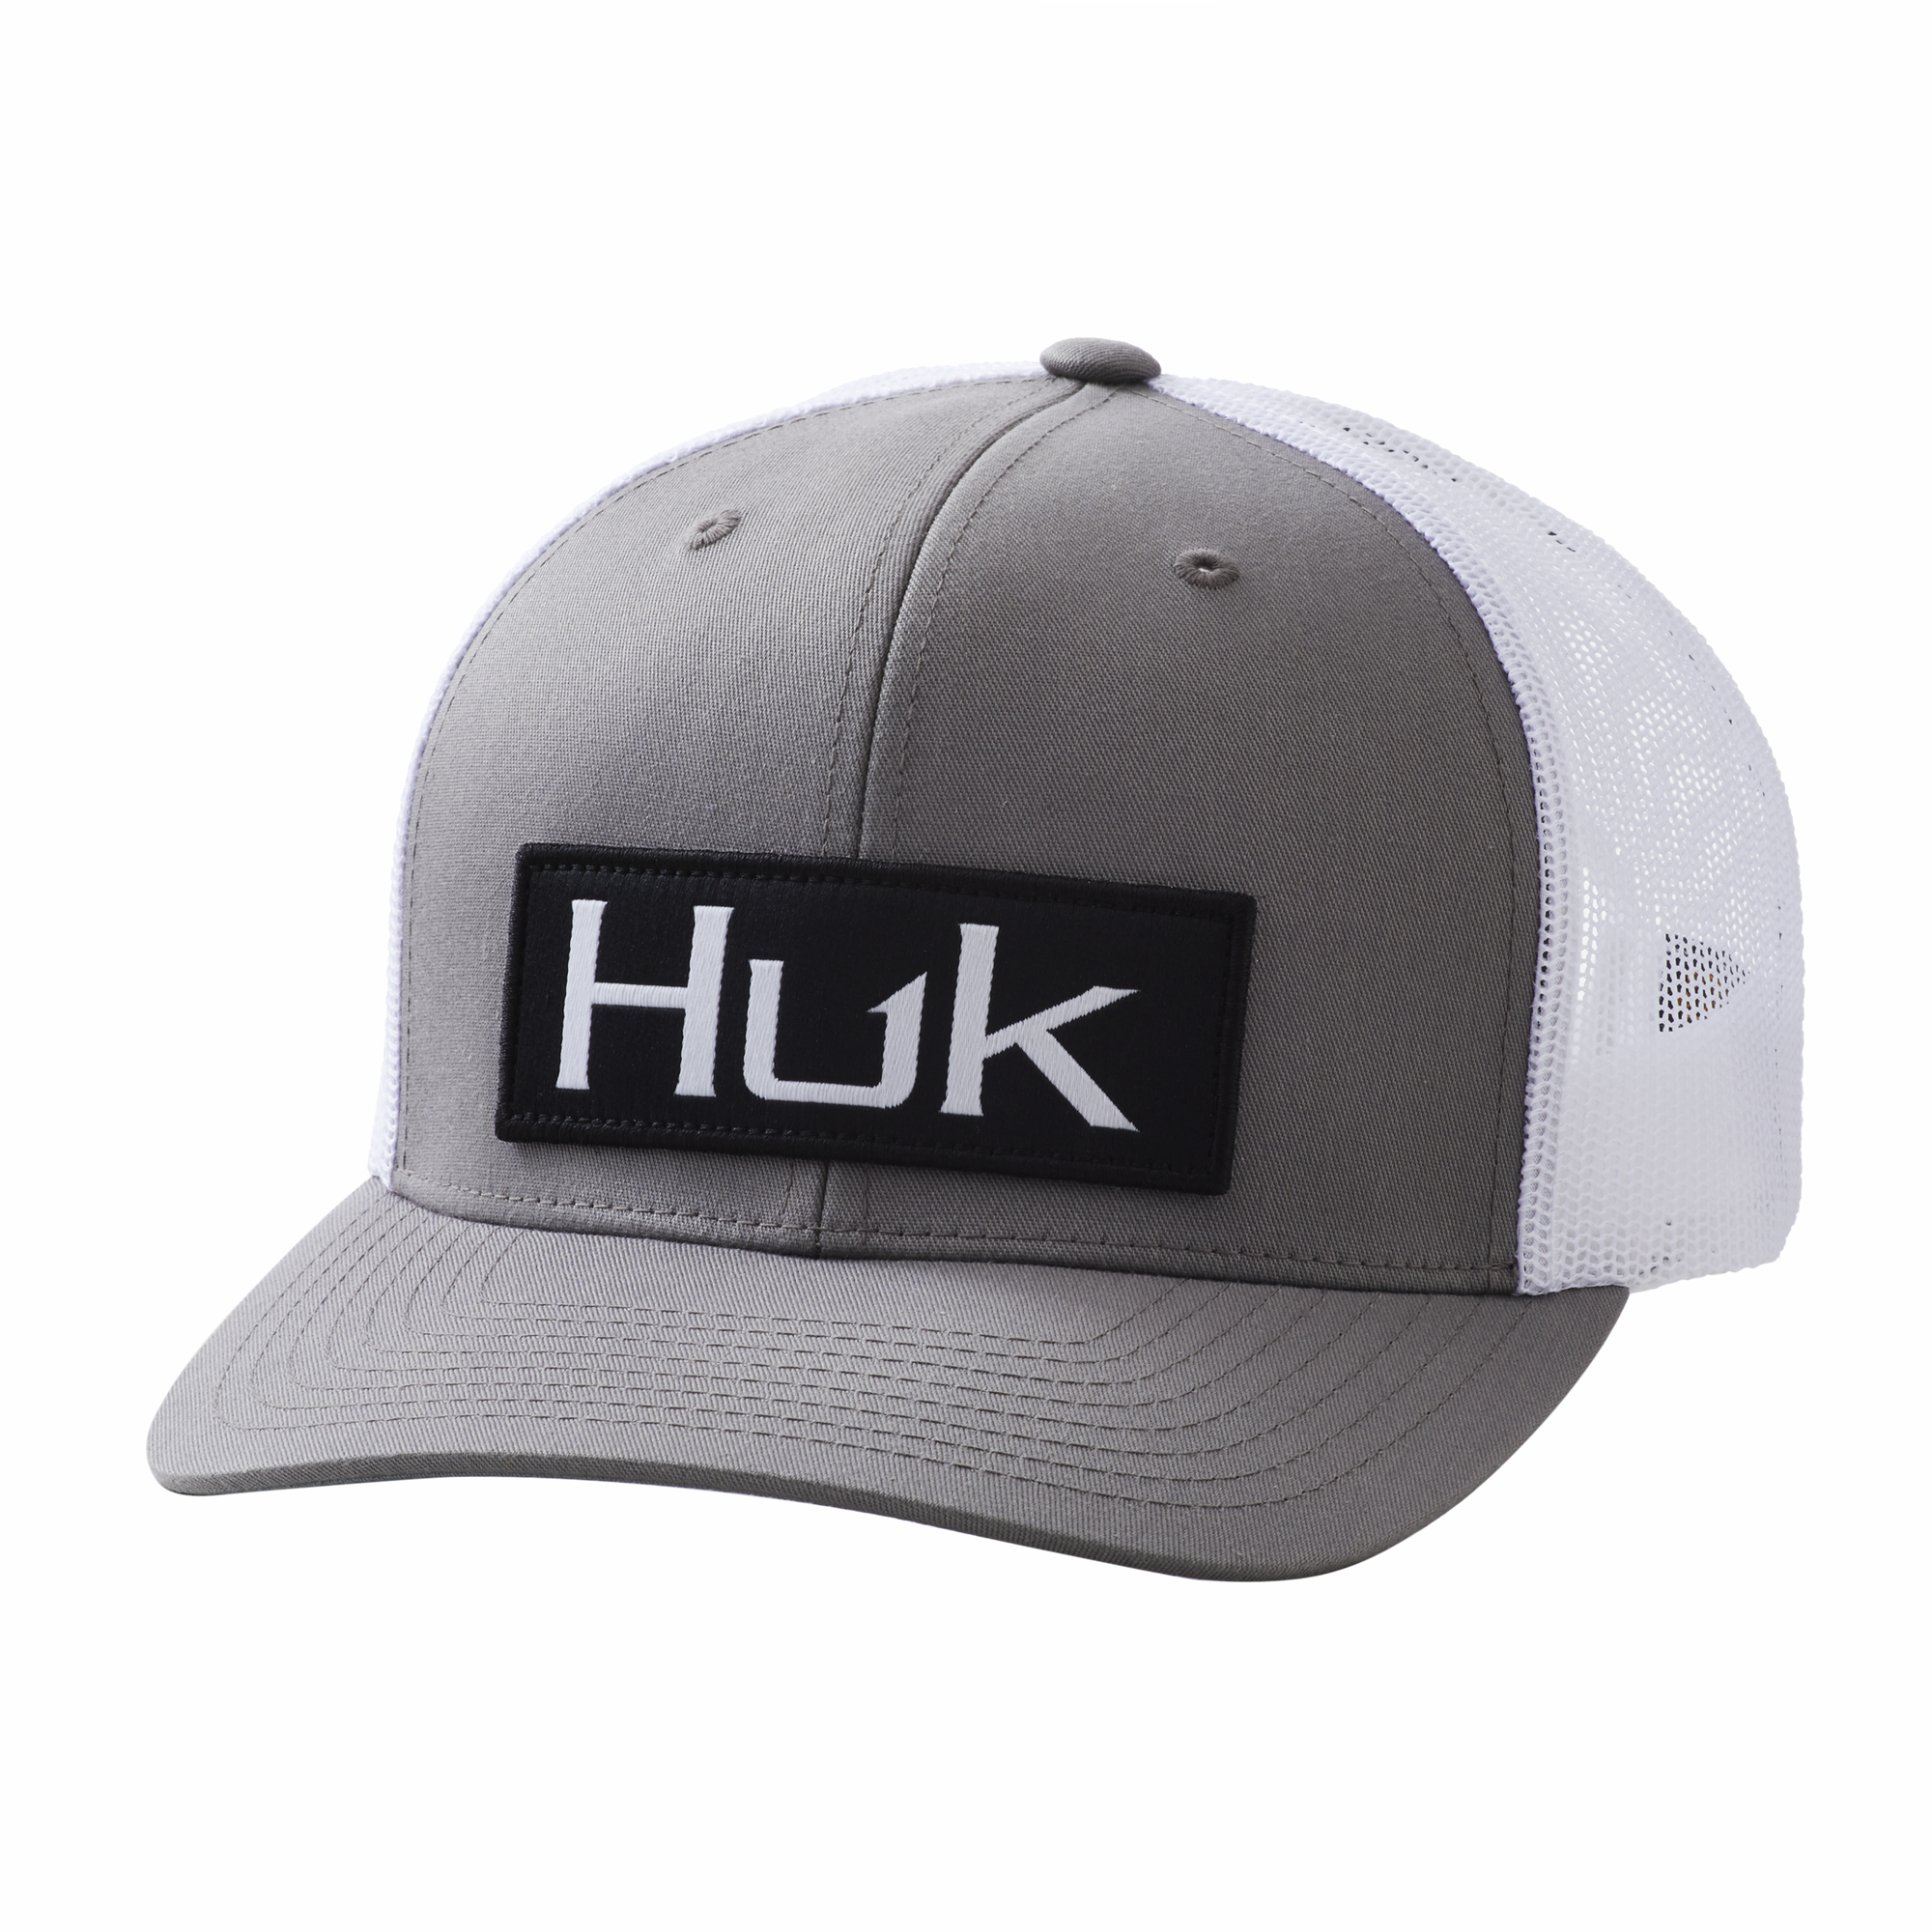 HUK ANGLER HAT